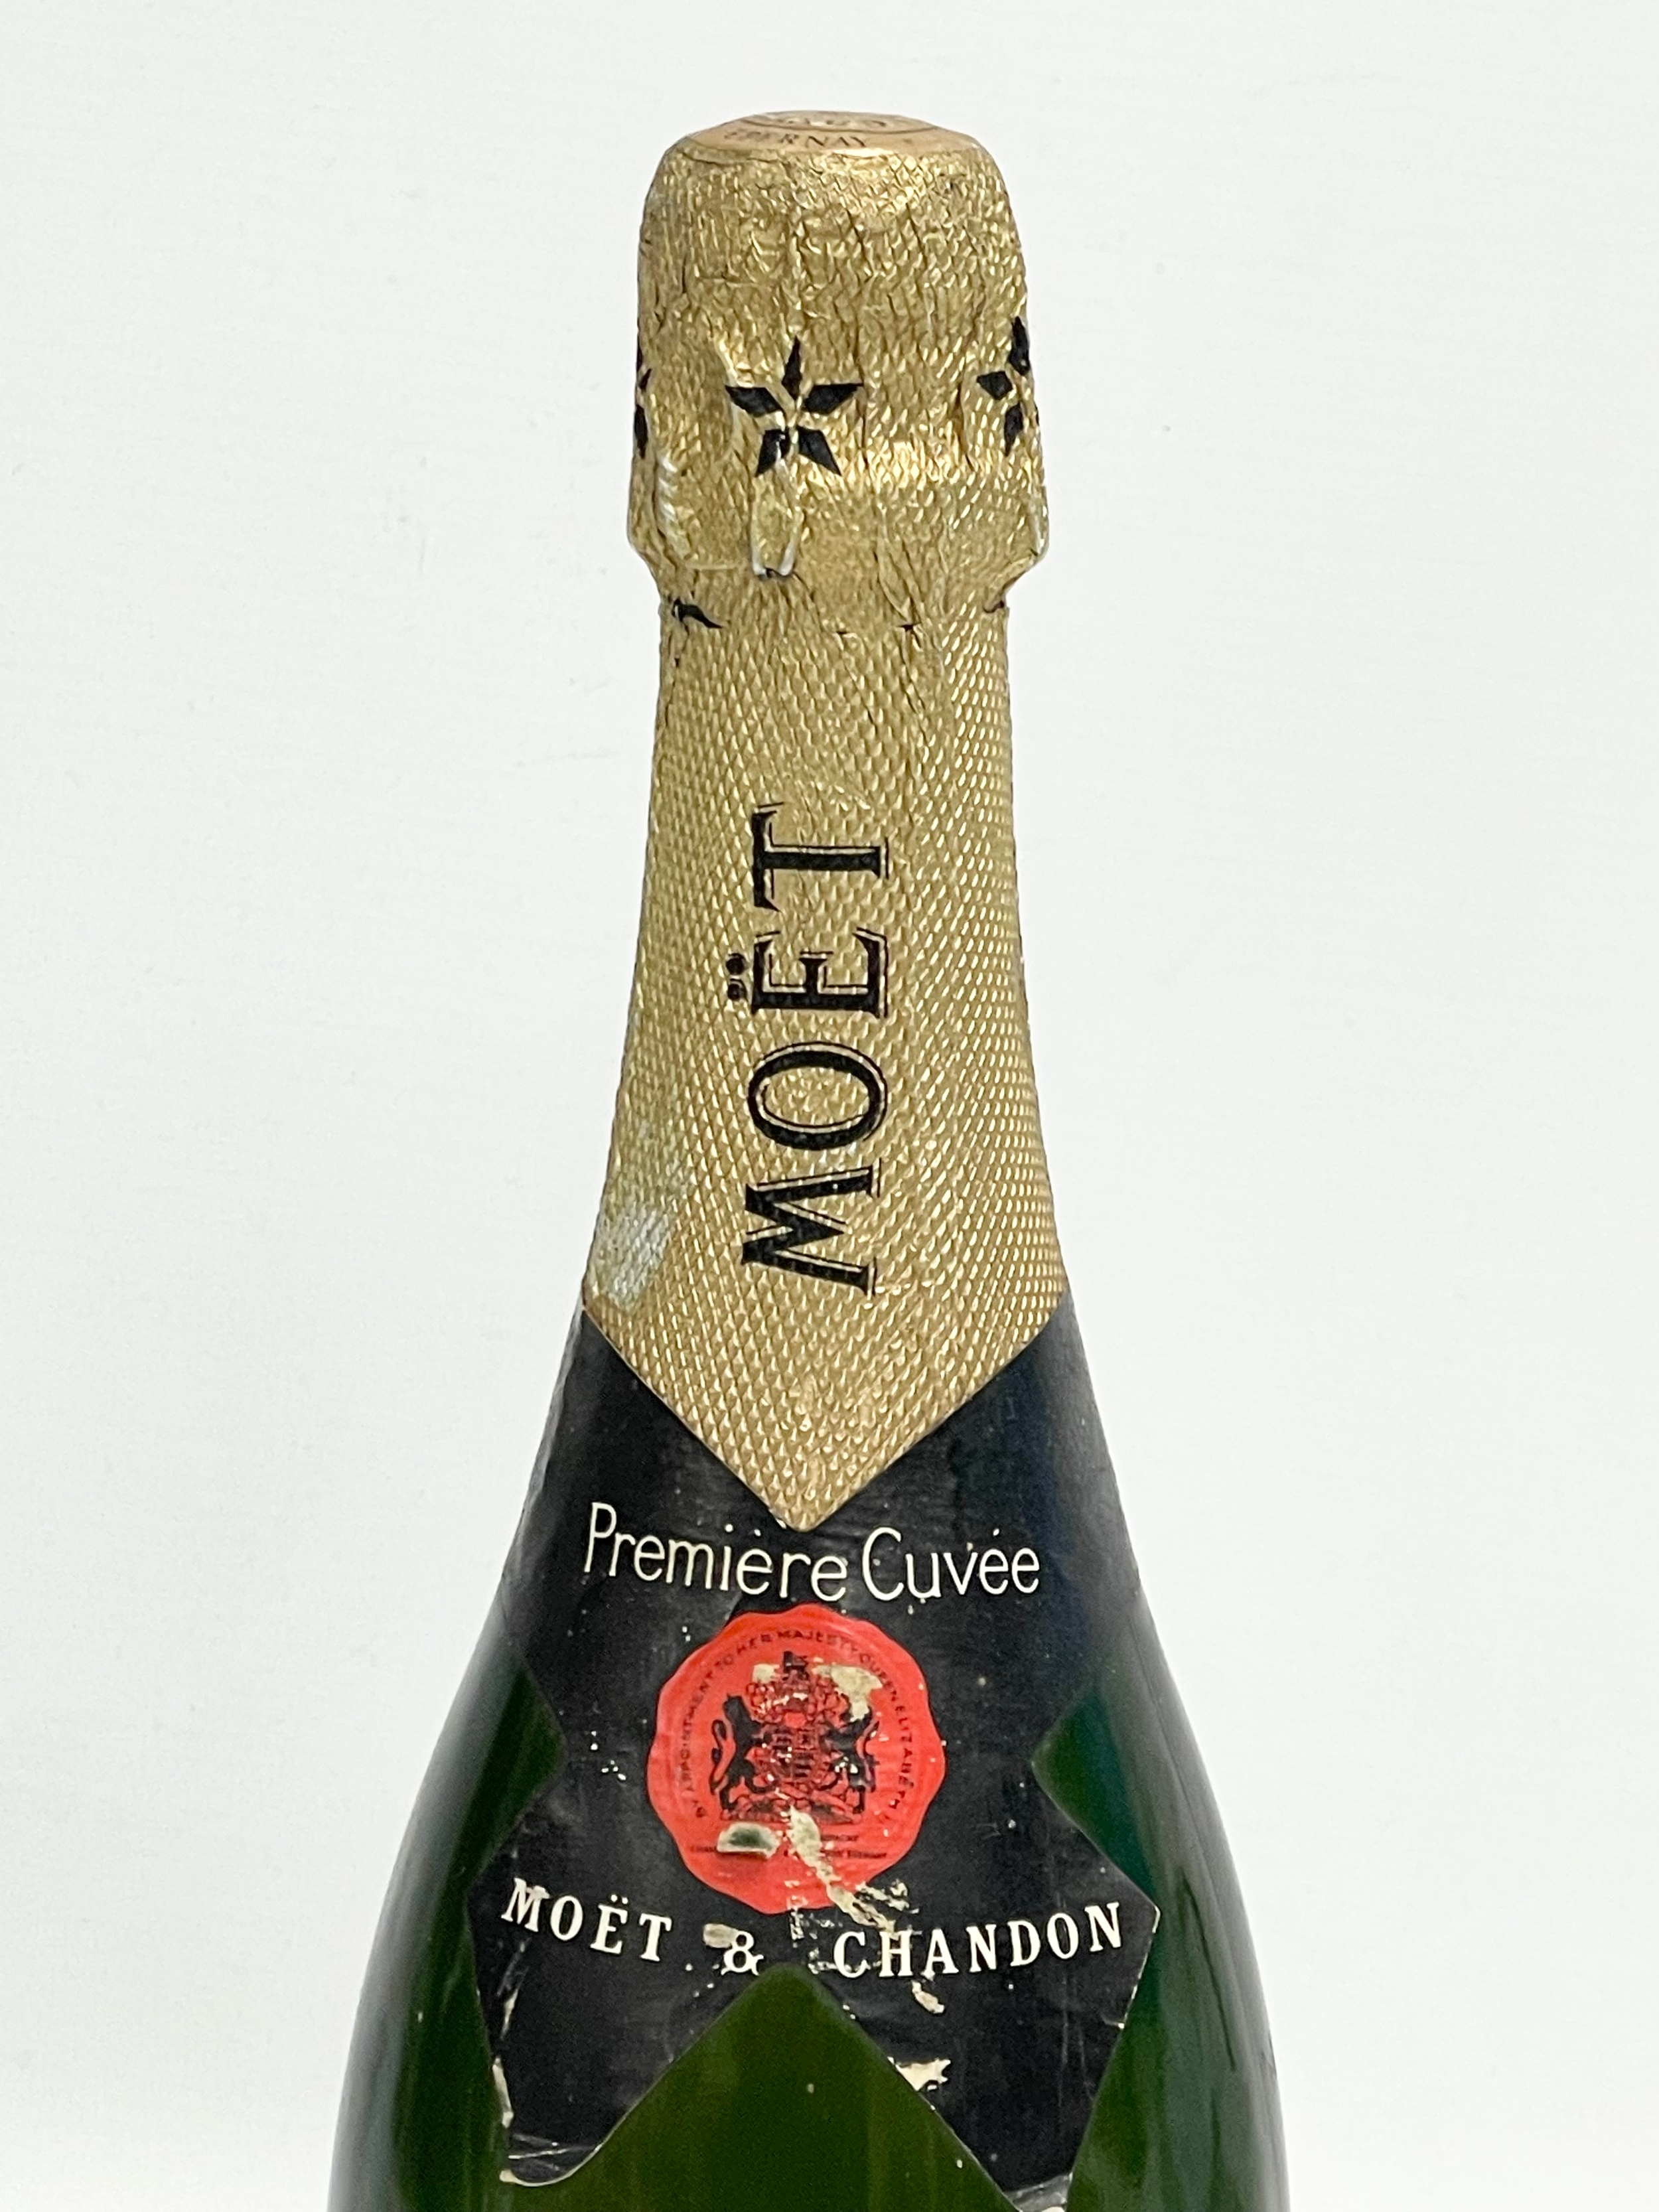 A bottle of vintage Moët & Chandon Premiere Cuvee champagne. 75cl. - Image 3 of 3